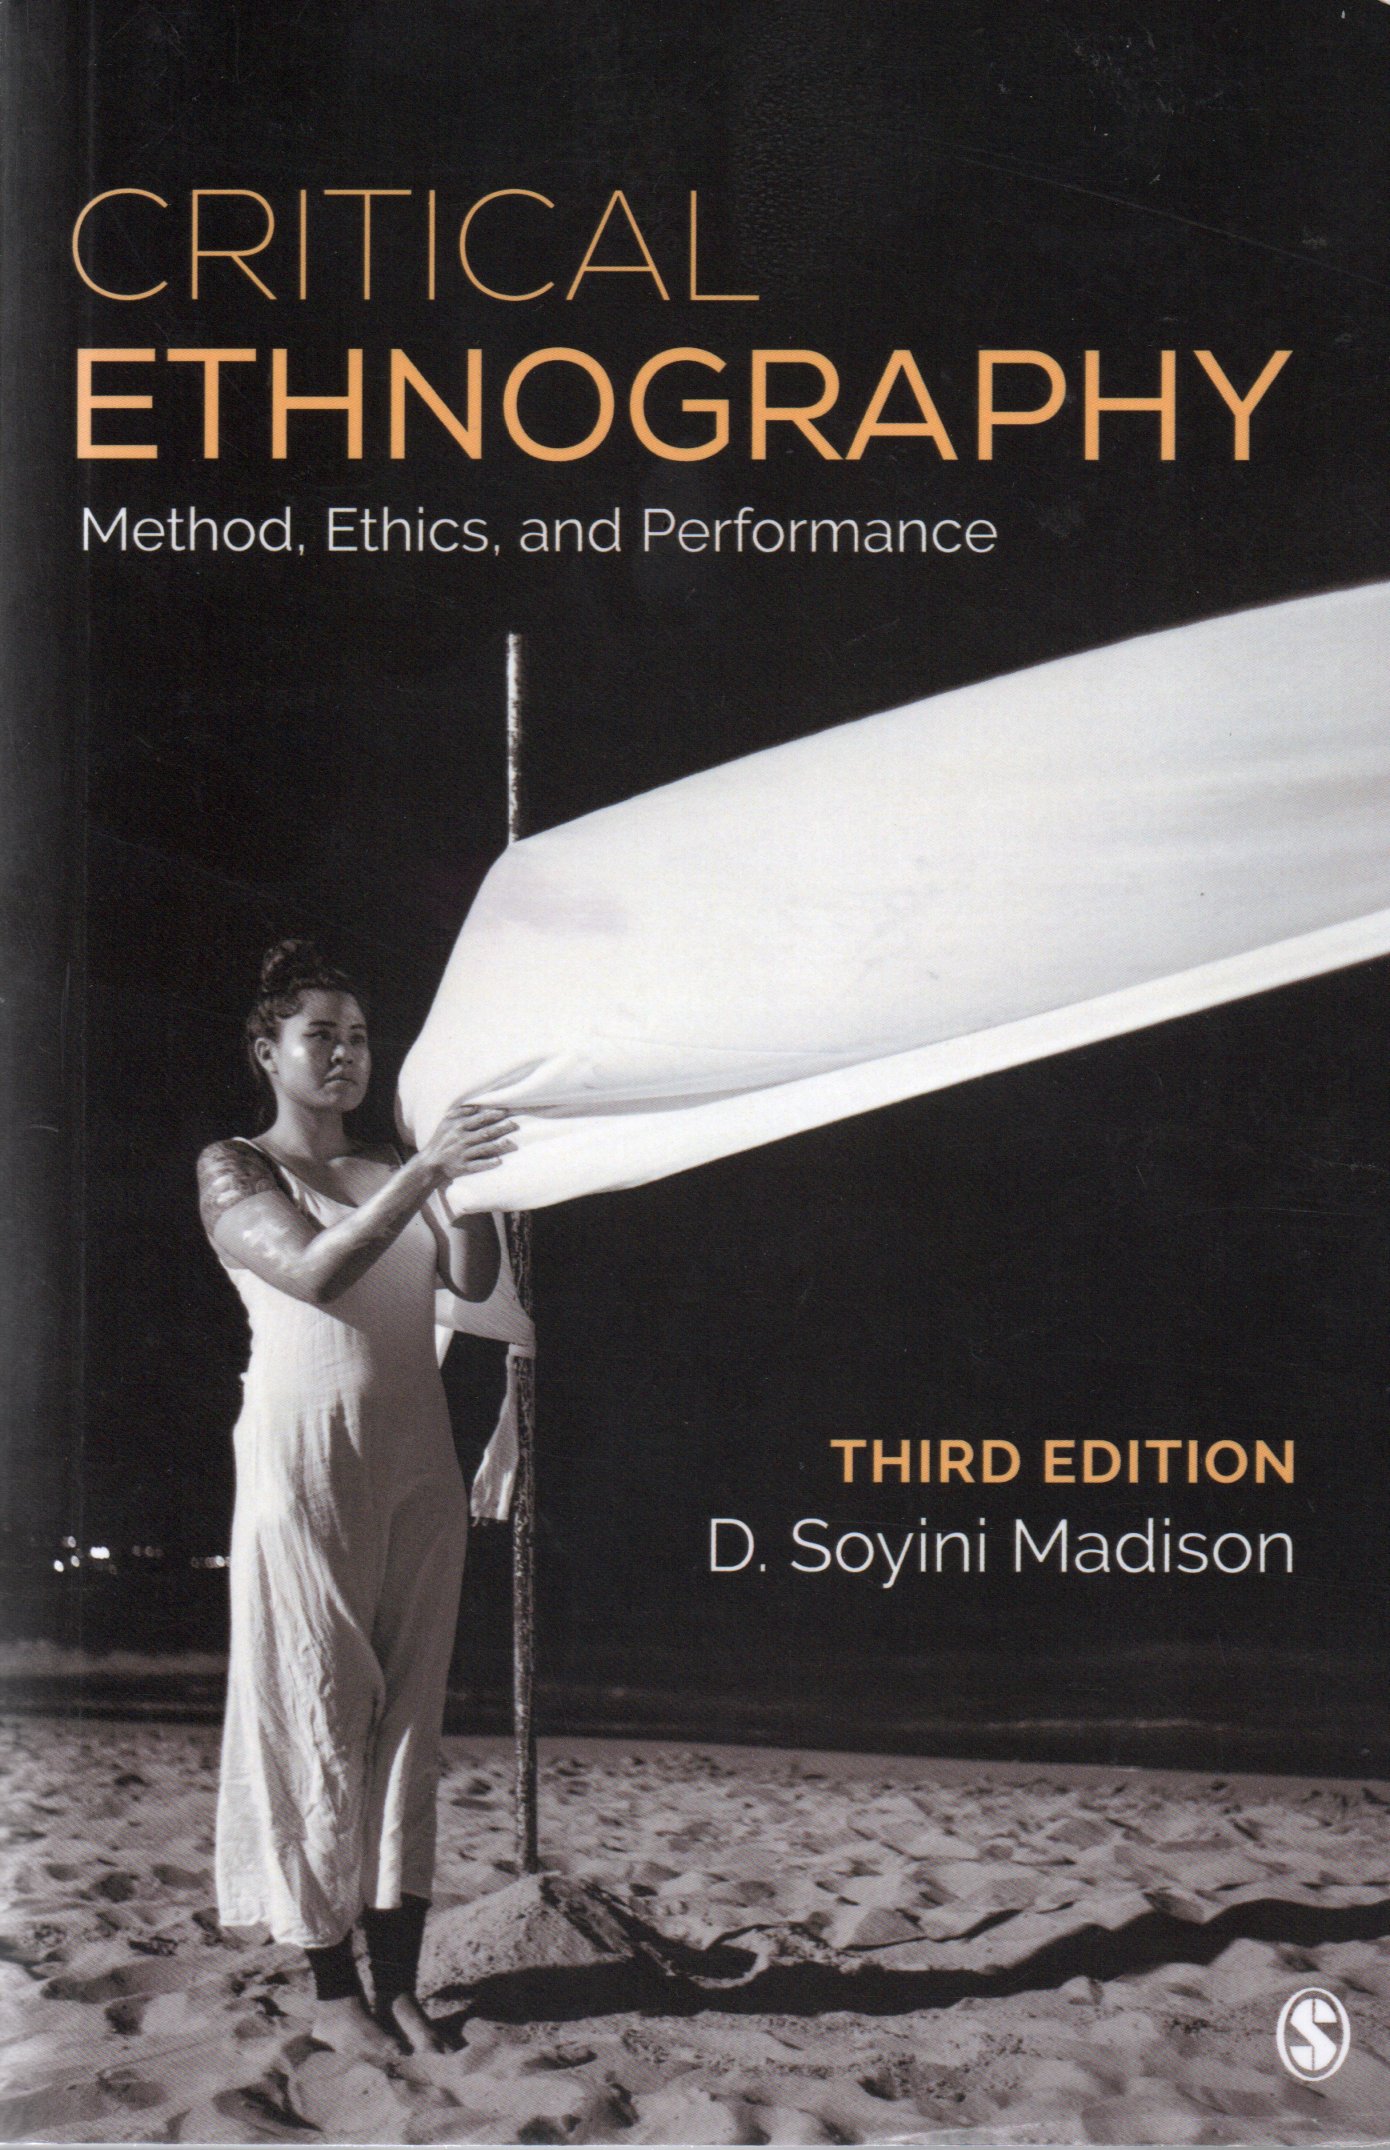 Critical ethnography : method, ethics, and performance /D. Soyini Madison